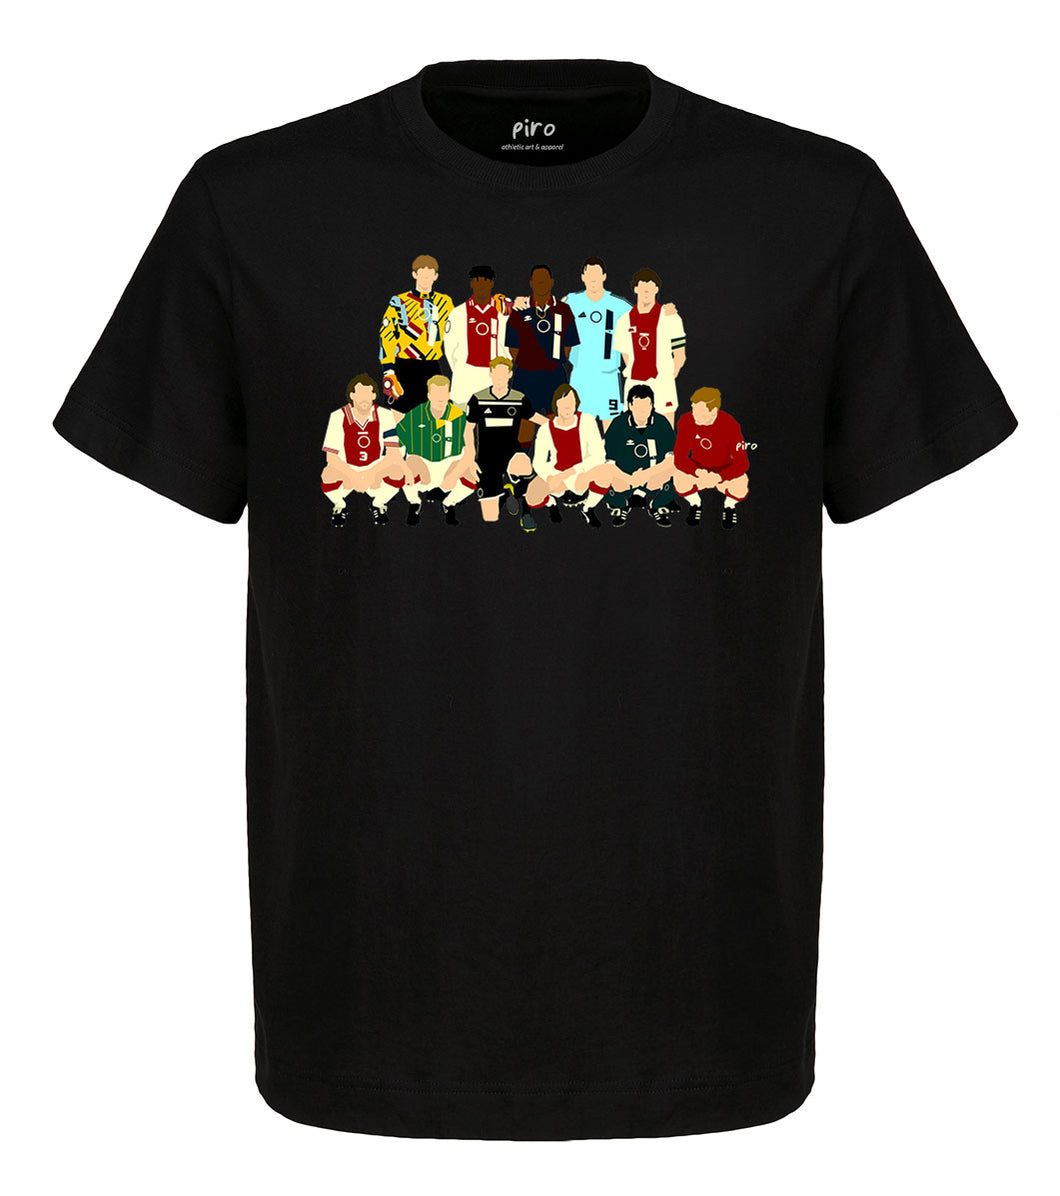 'Amsterdam Legends' - basic black t-shirt